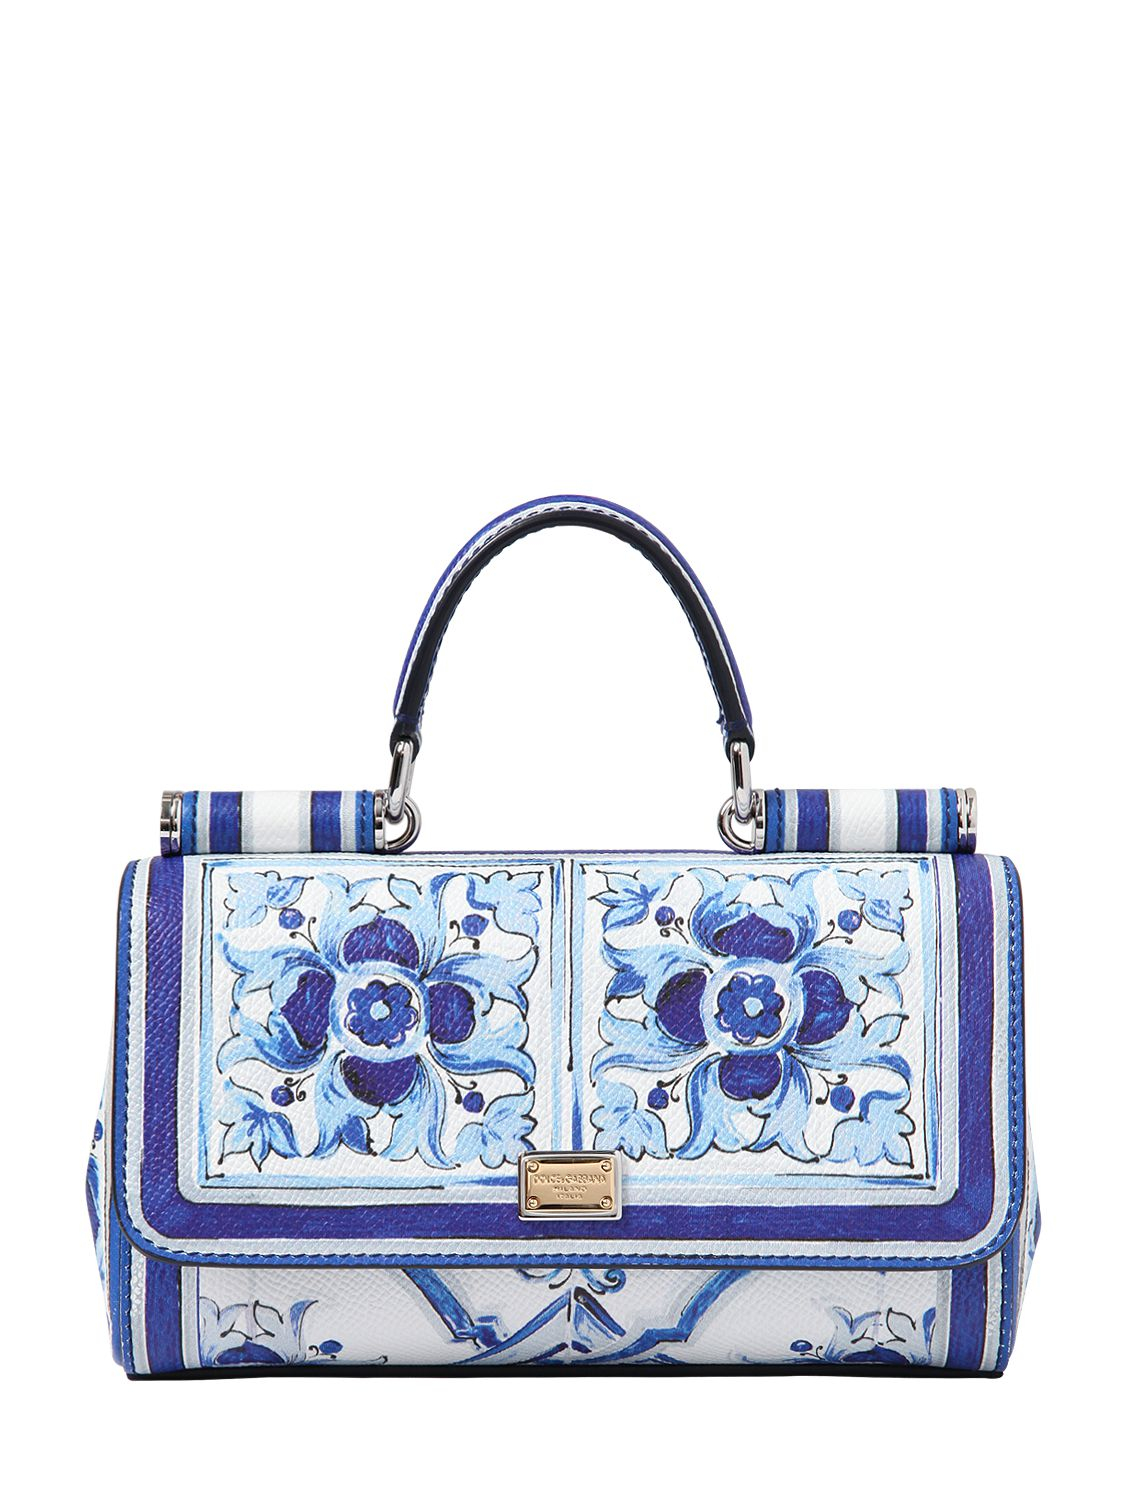 Lyst - Dolce & Gabbana Jeans Printed Dauphine Shoulder Bag in Blue